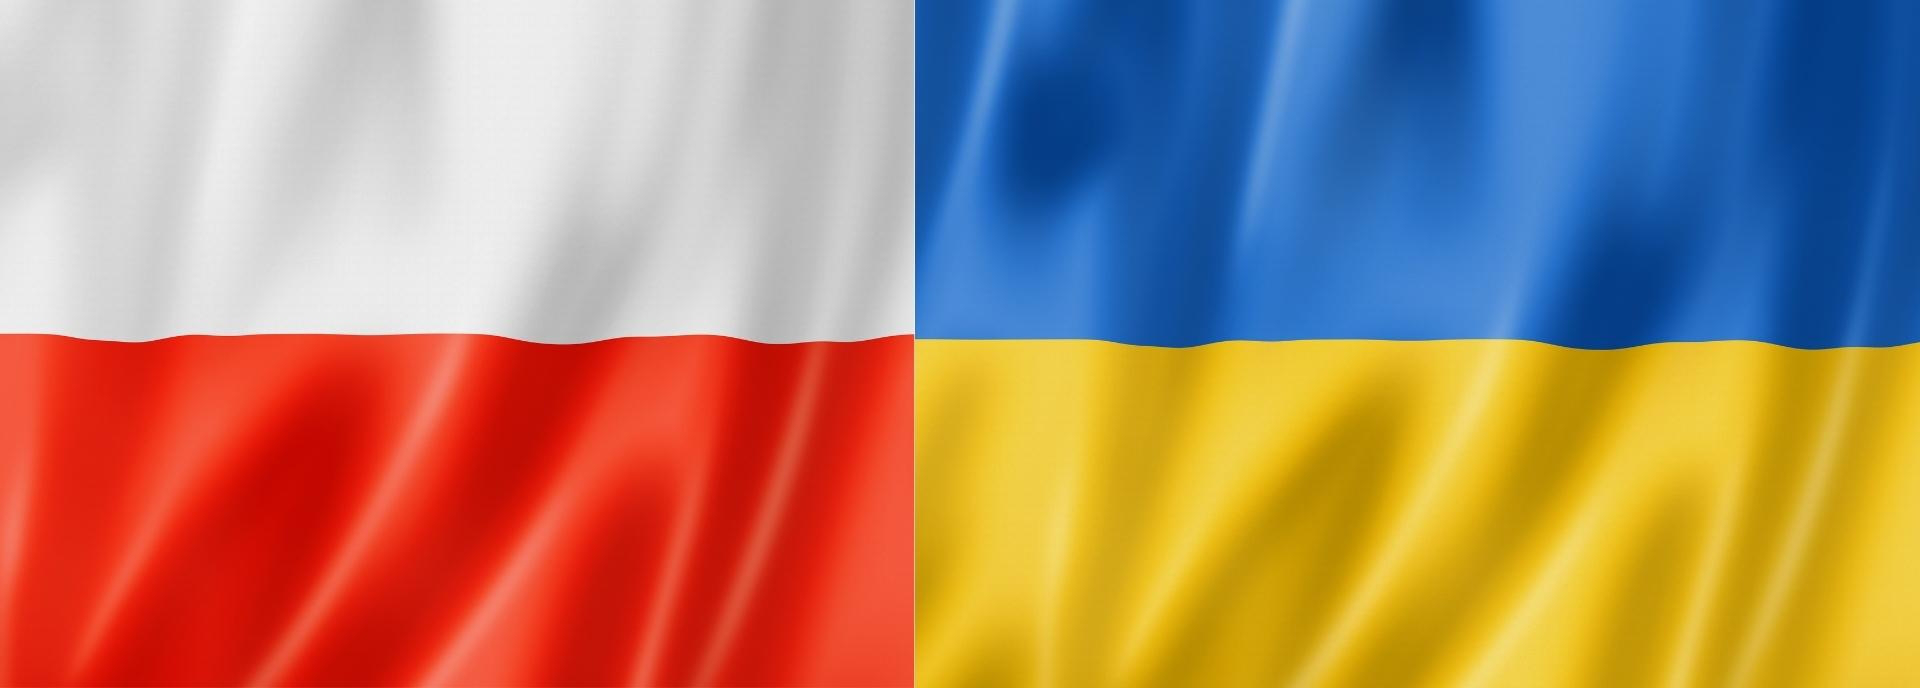 thumbnails The Launch of ‘Rebuild Ukraine’ AmCham Working Group, February 28, 2023, 9:30 - 11:00